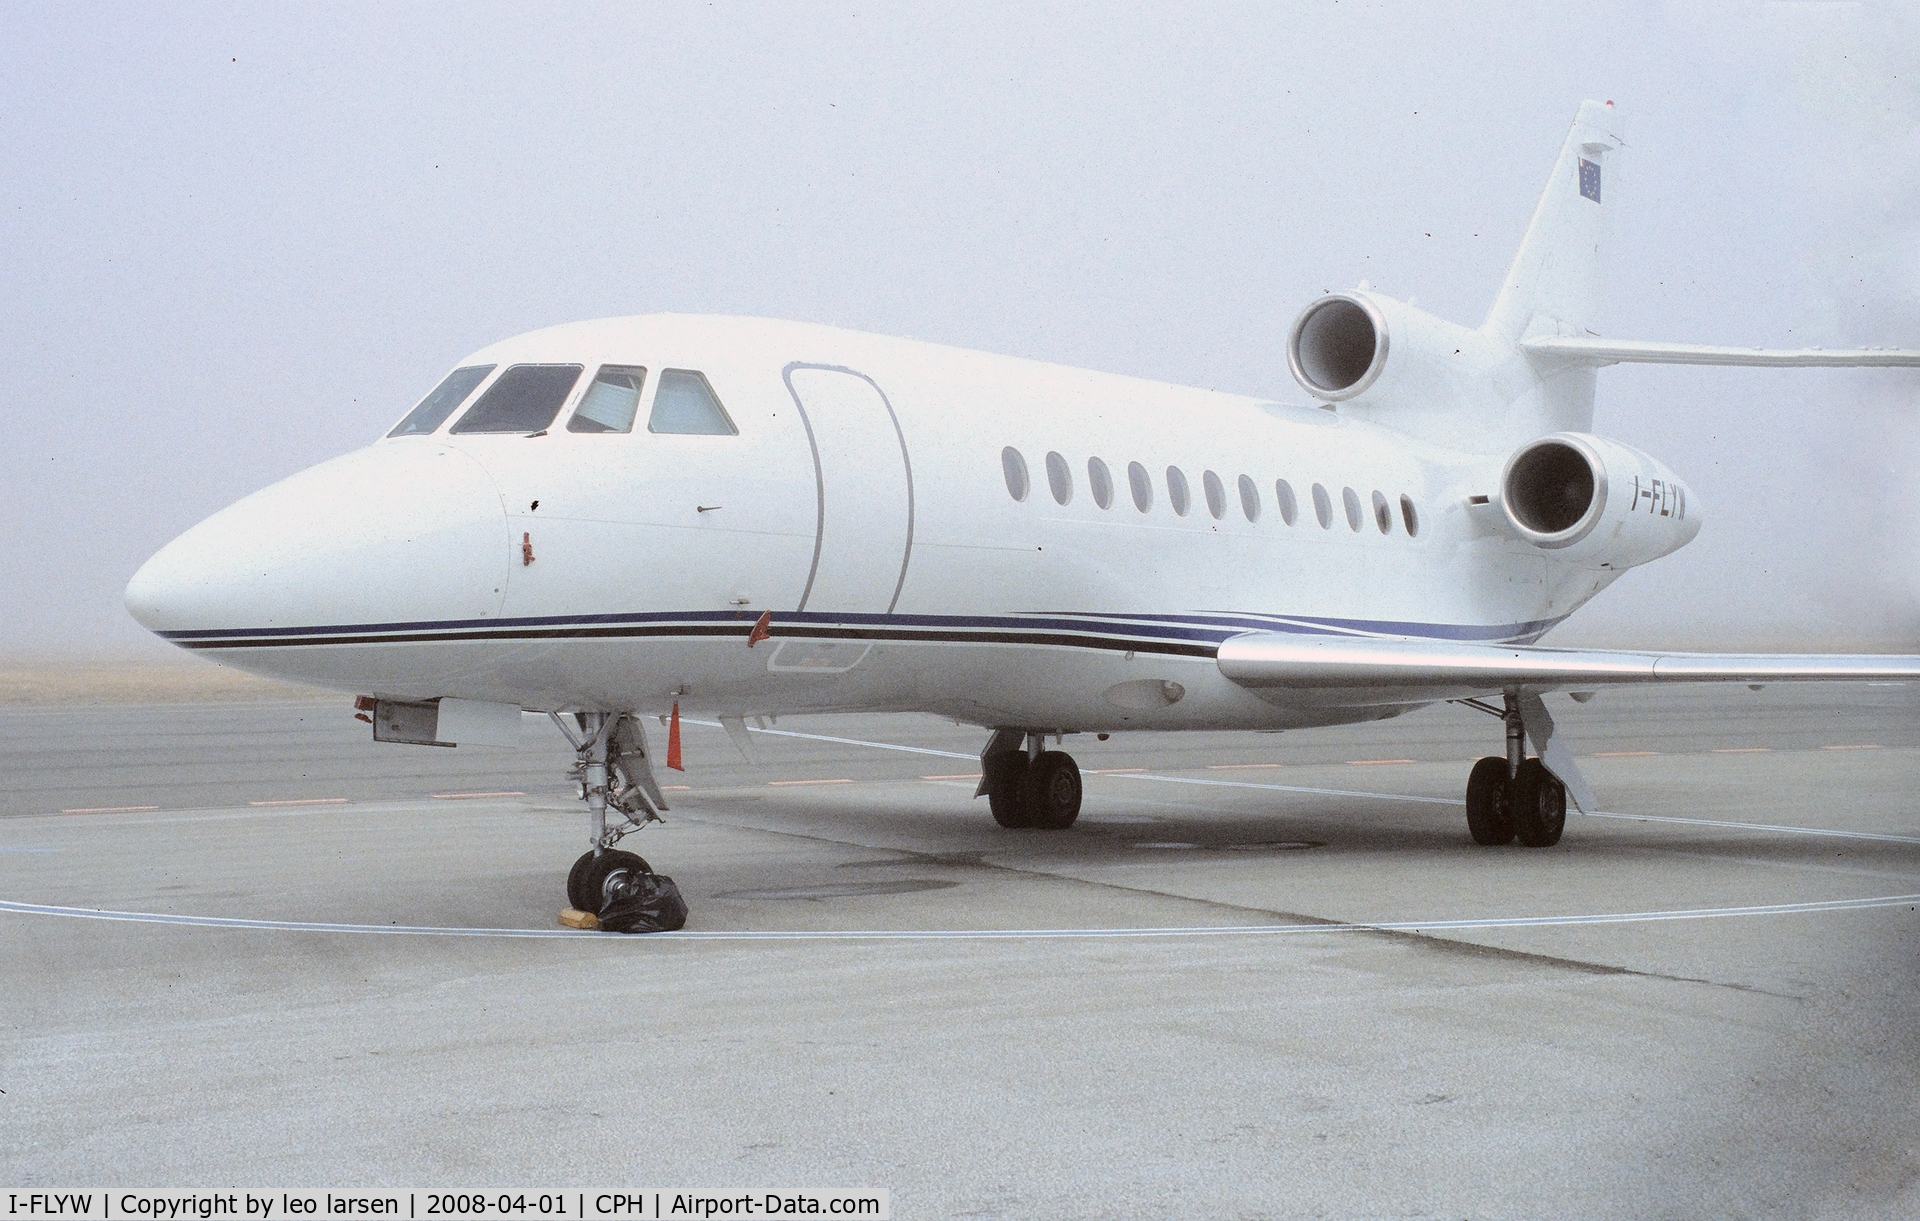 I-FLYW, 1998 Dassault Falcon 900EX C/N 27, Copenhagen 1.4.2008